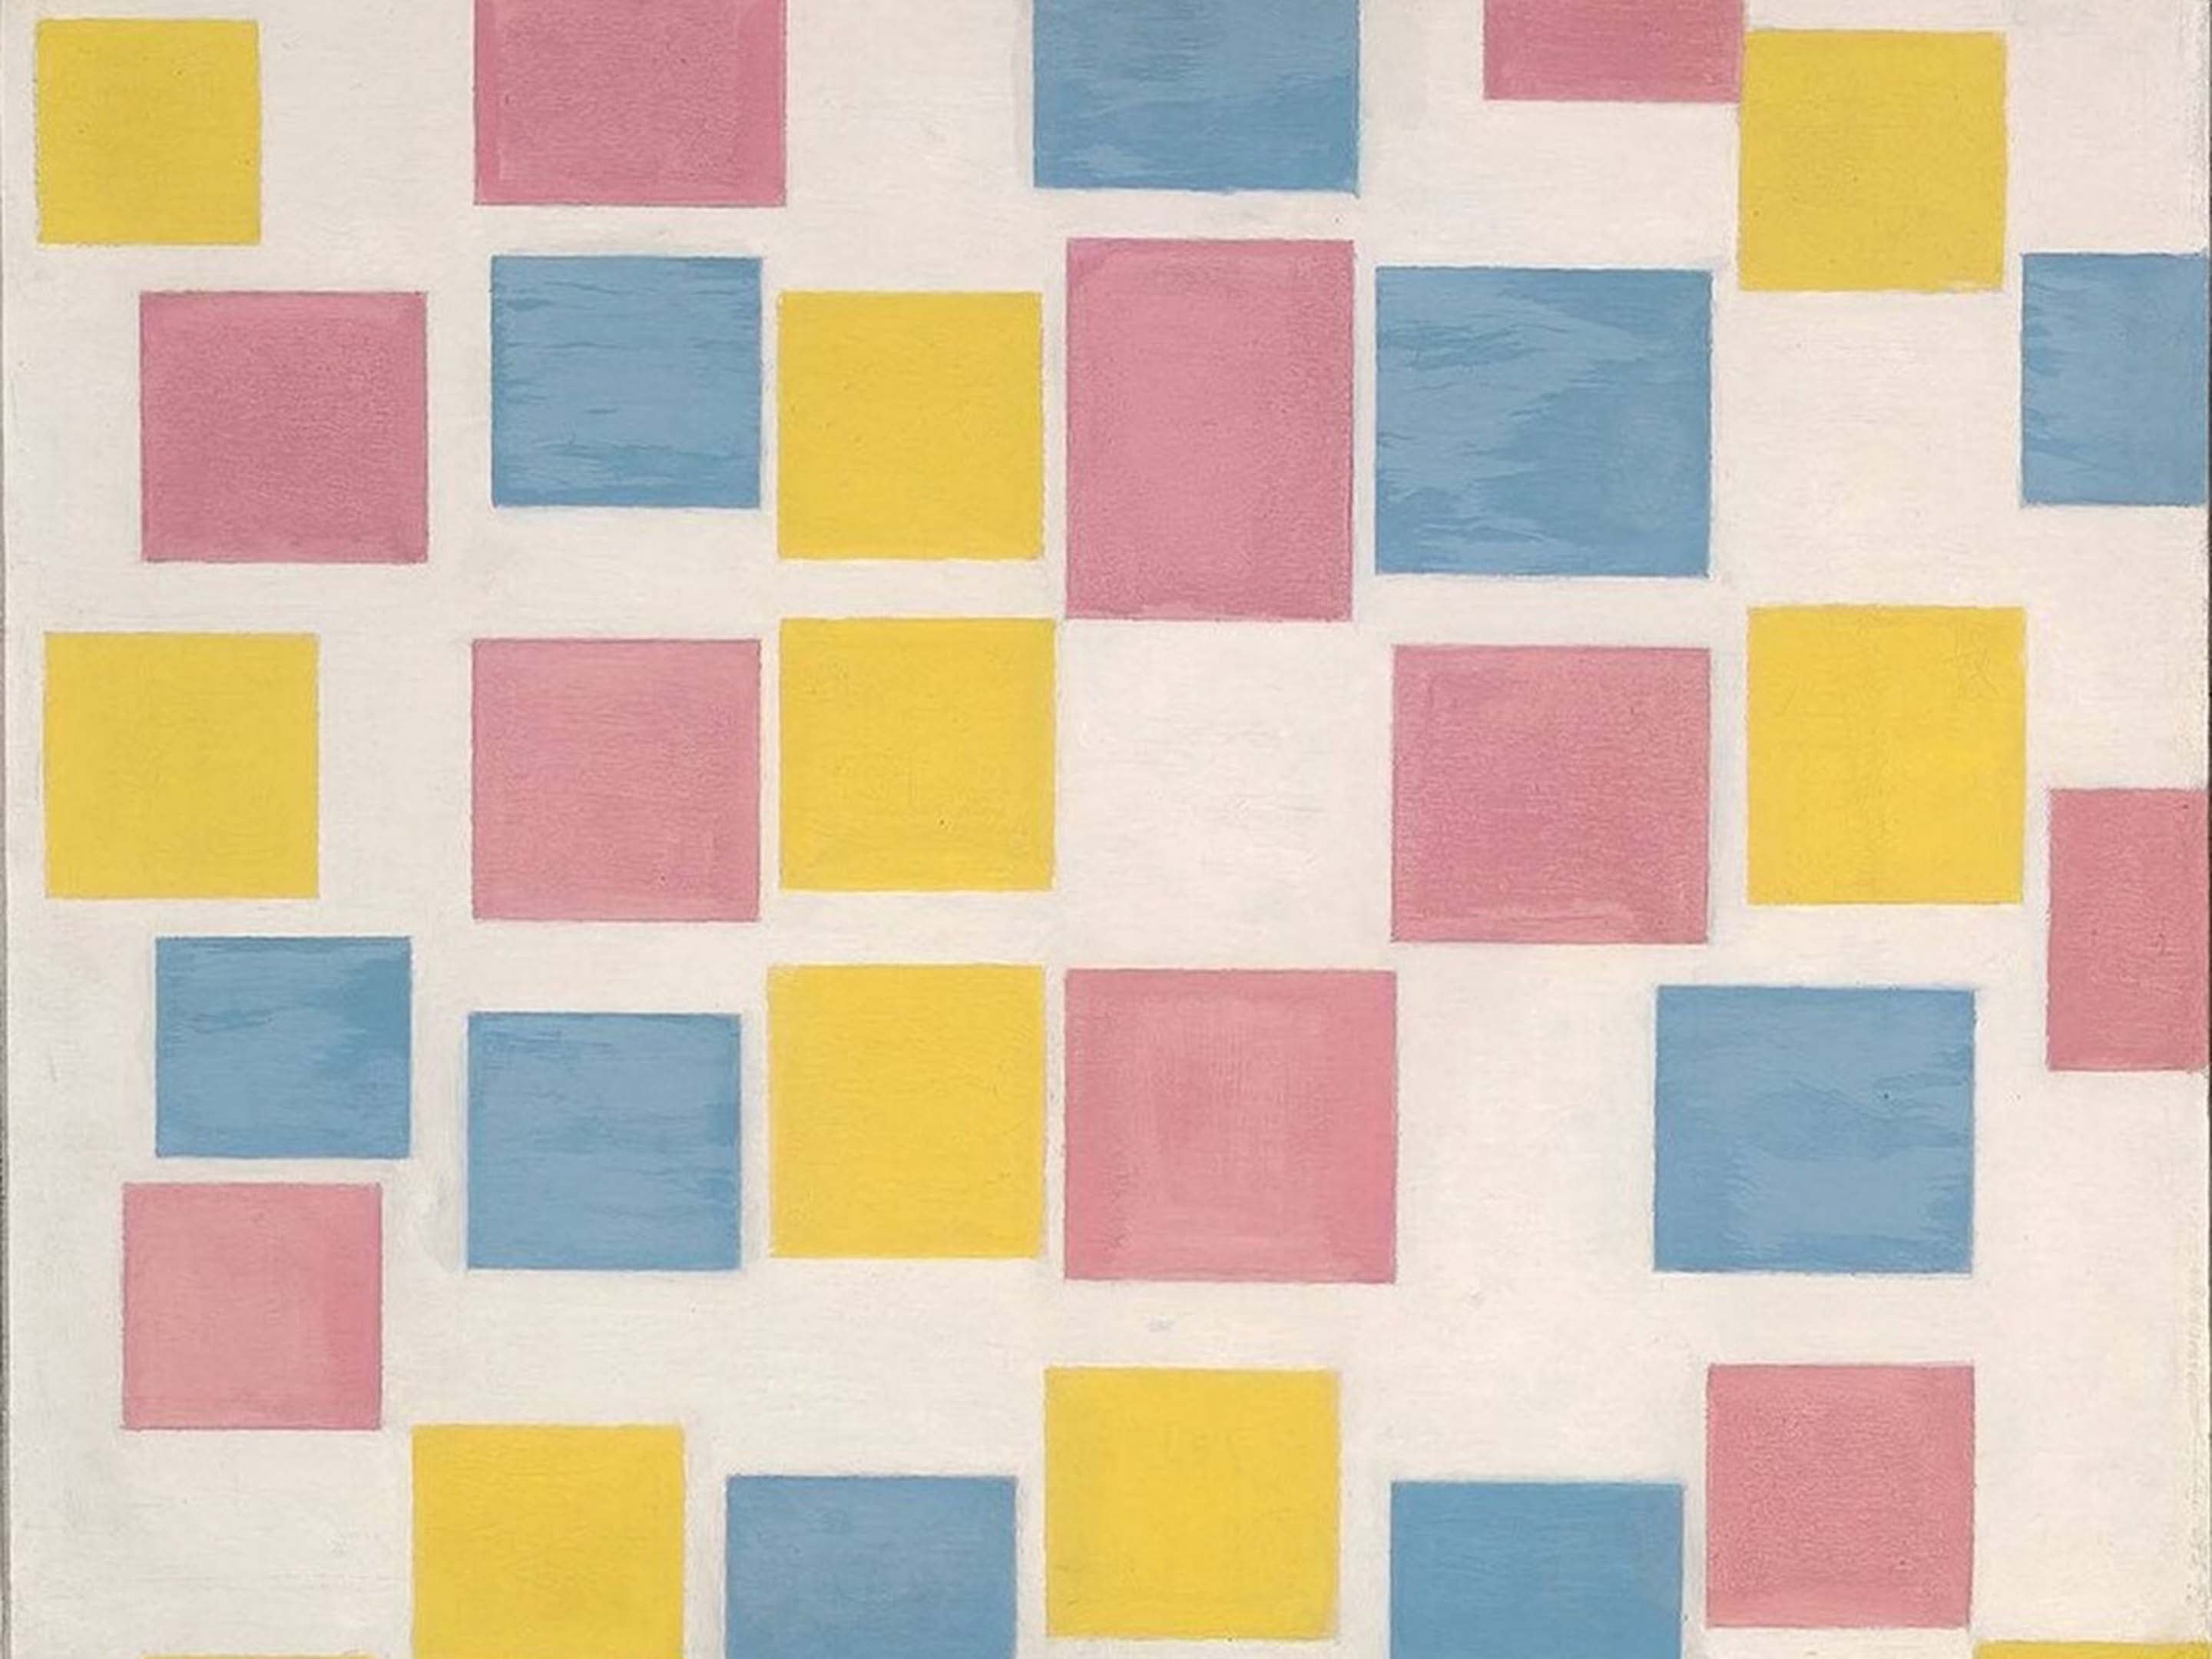 Mondrian Piet - Composition with Color Fields